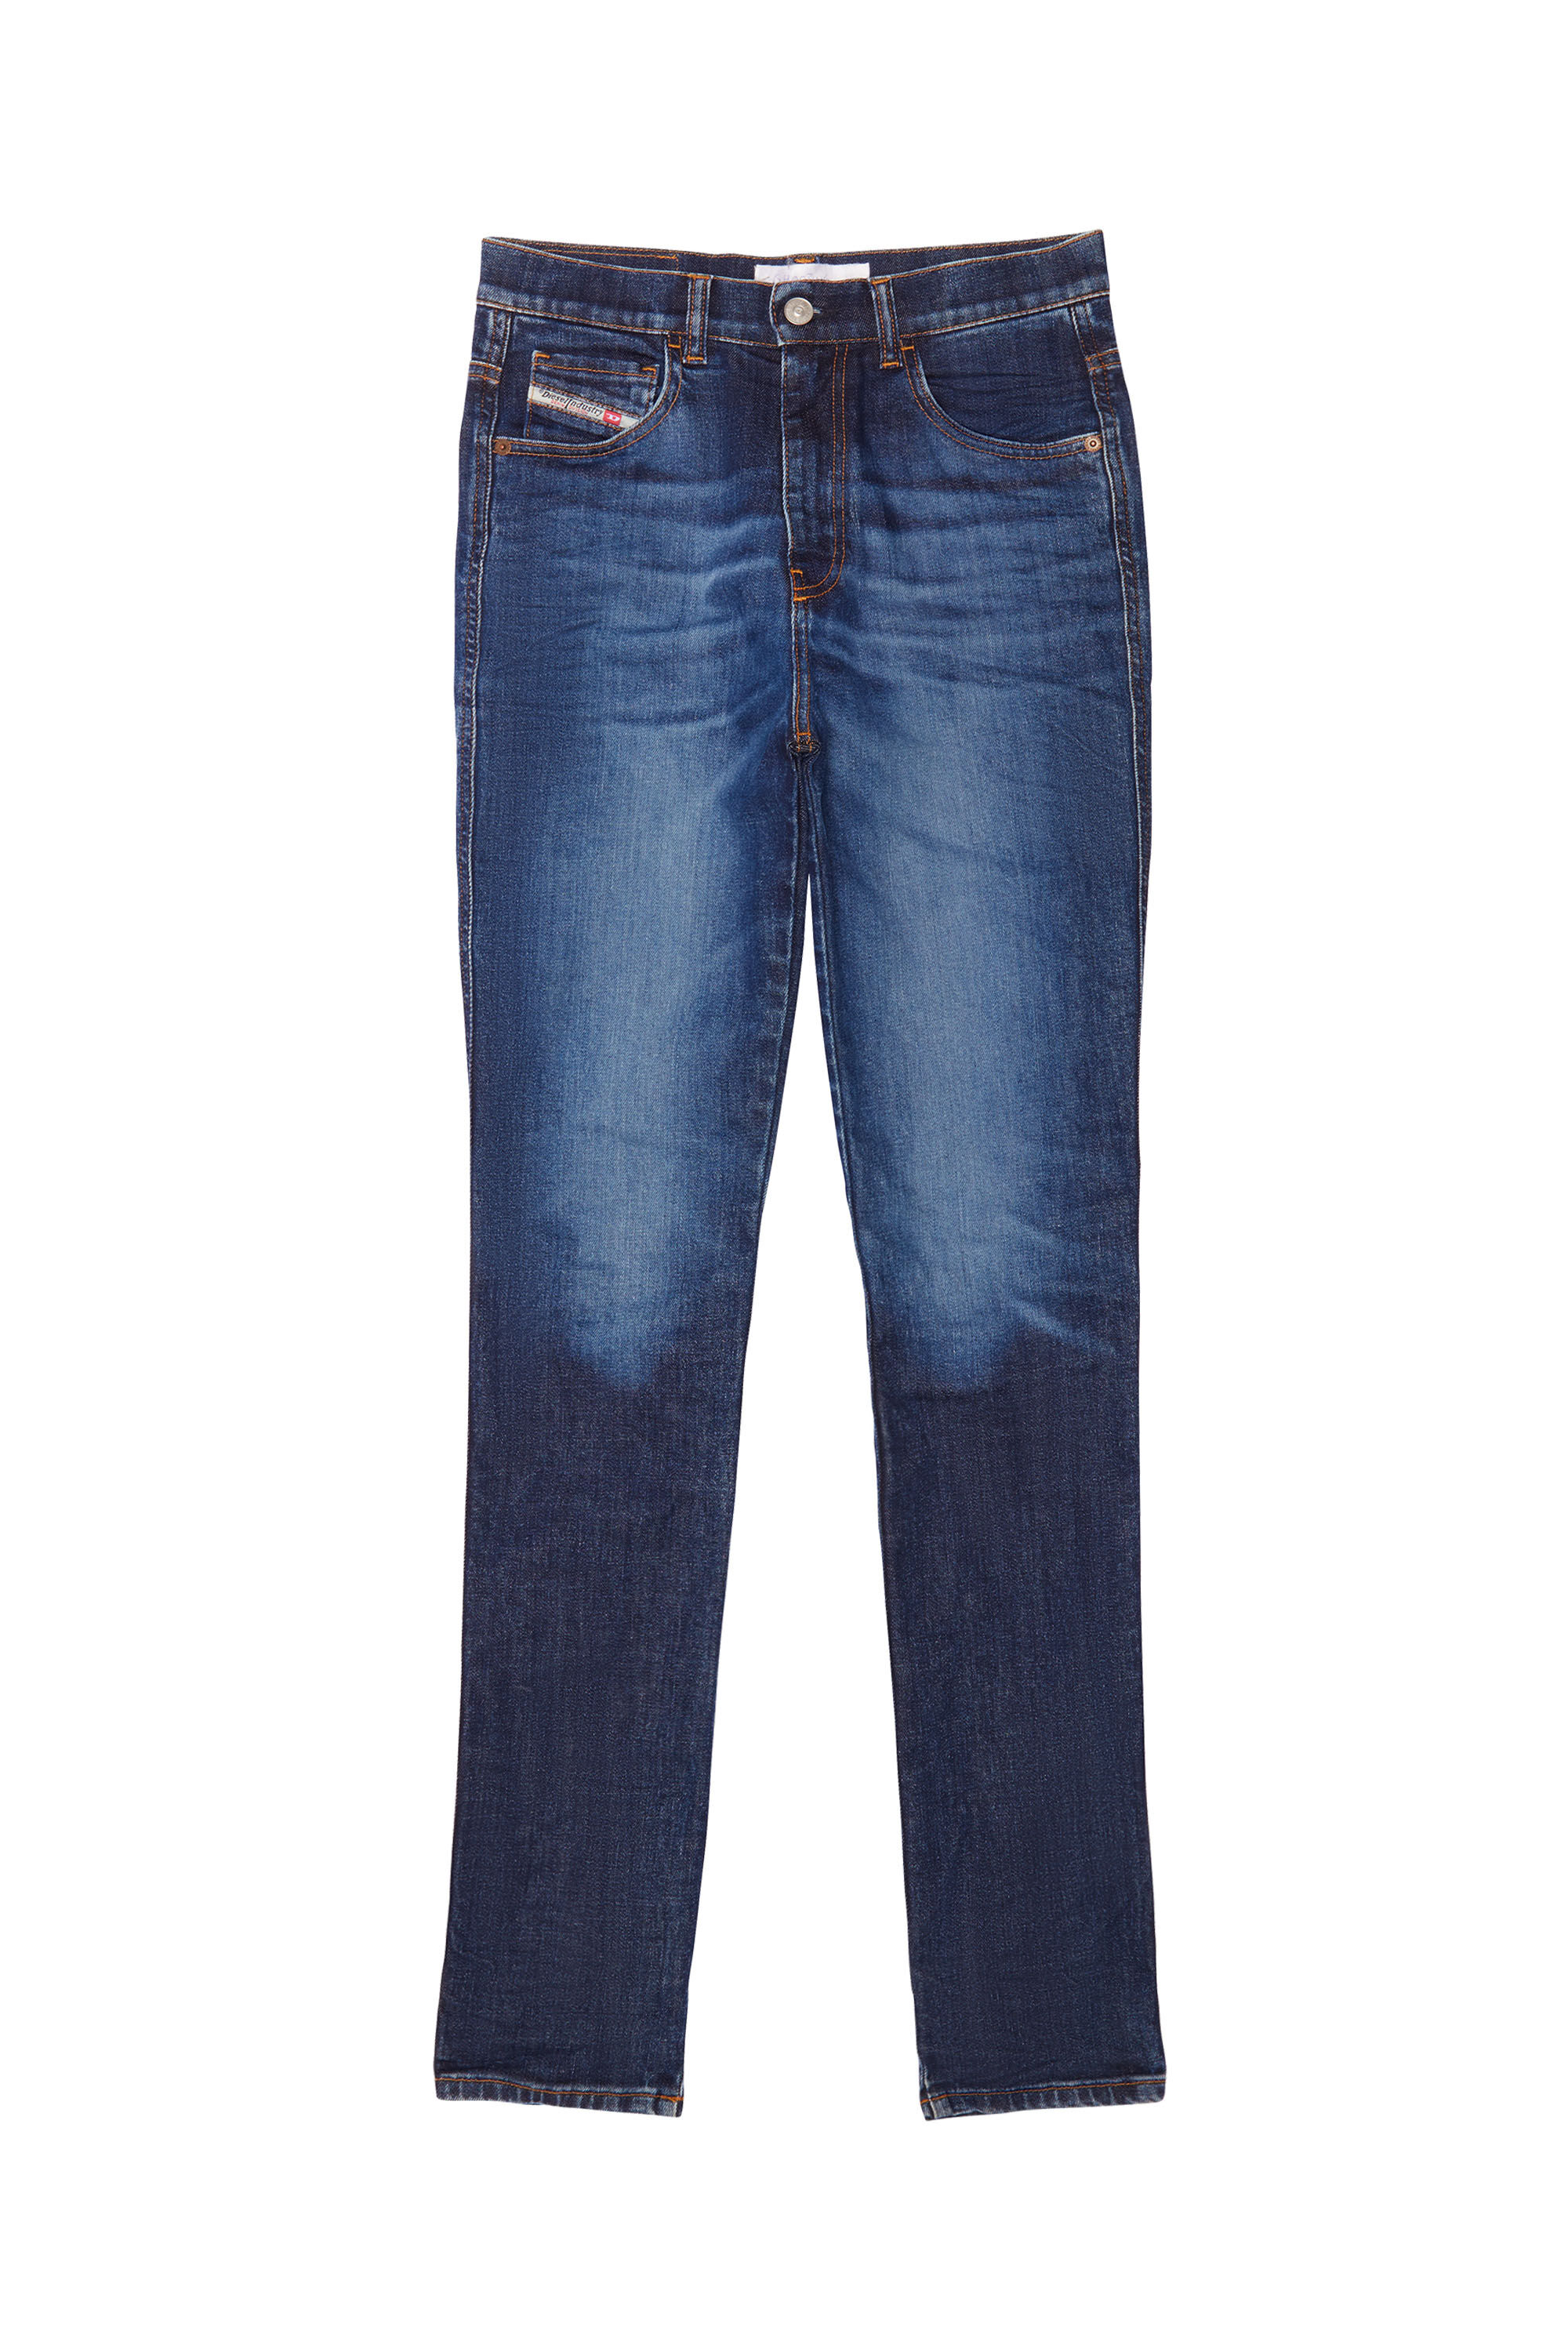 Women Medium blue Straight Mom Jeans: 1994 09C63 | Diesel